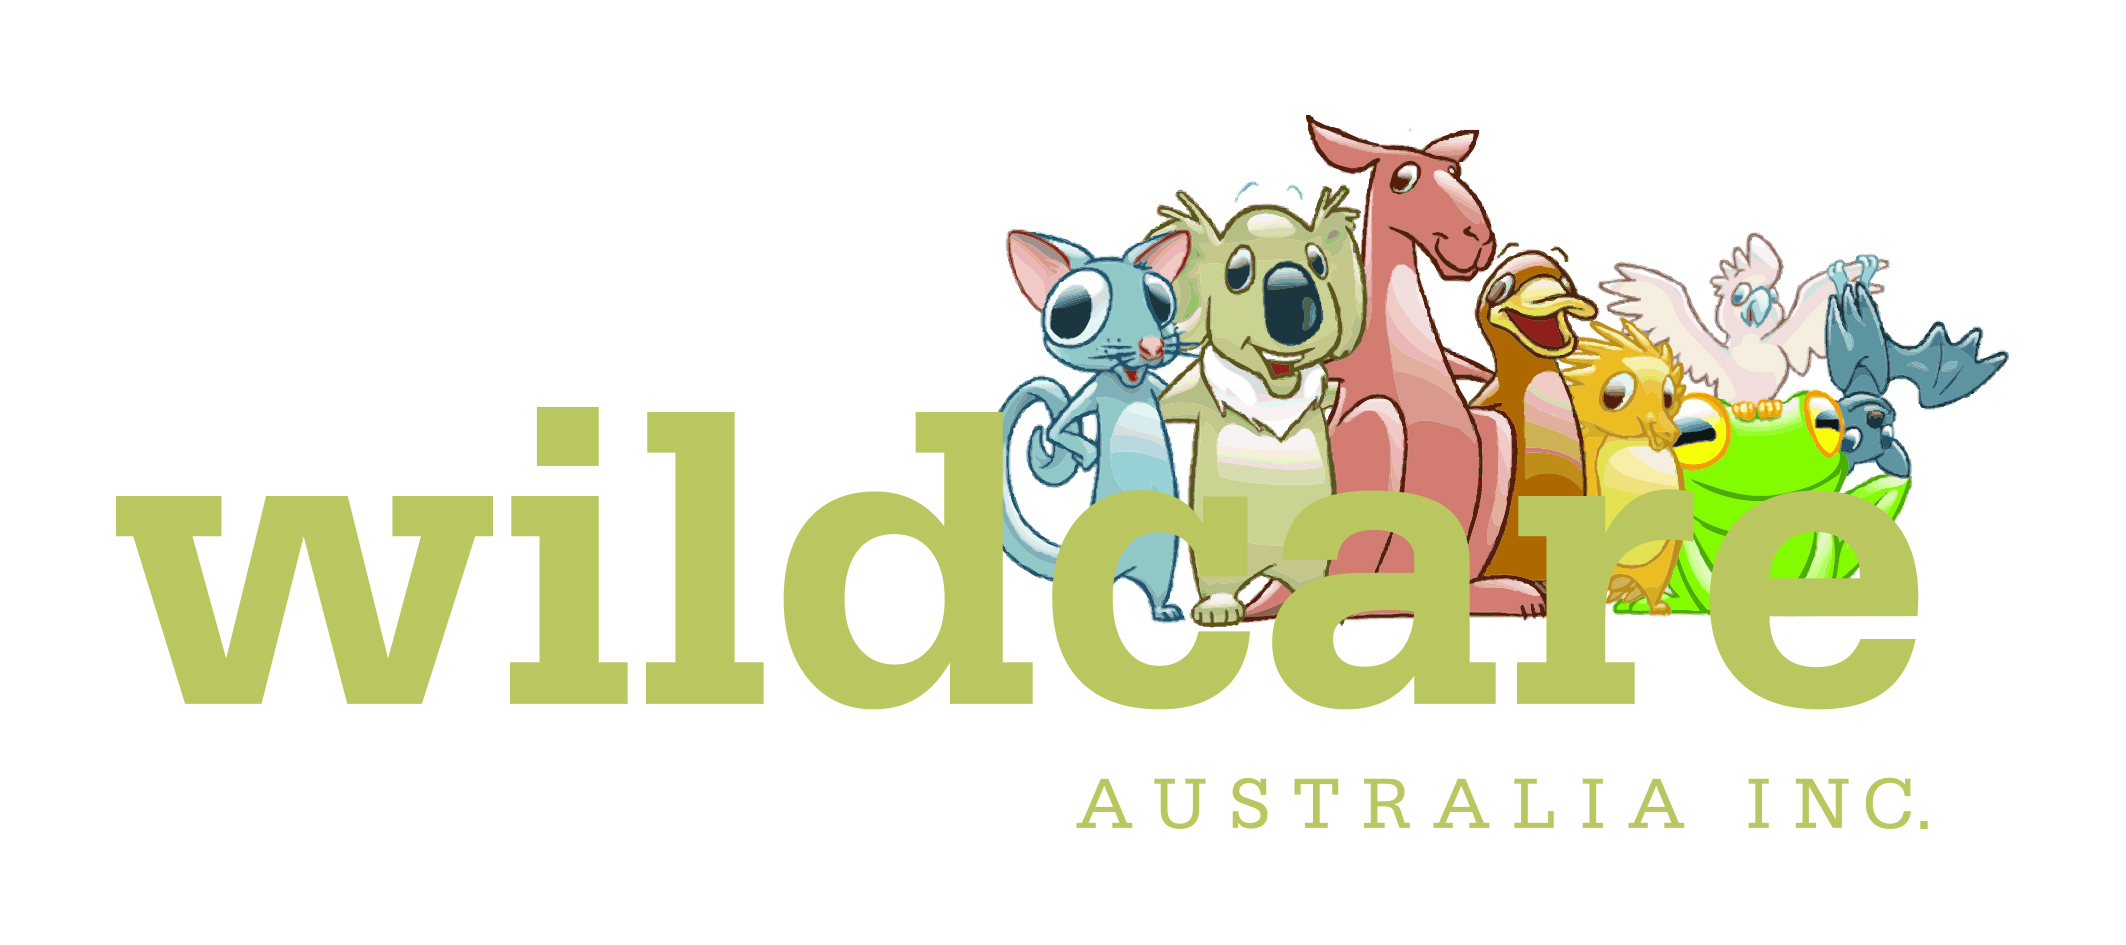 Wildcare Australia Inc.